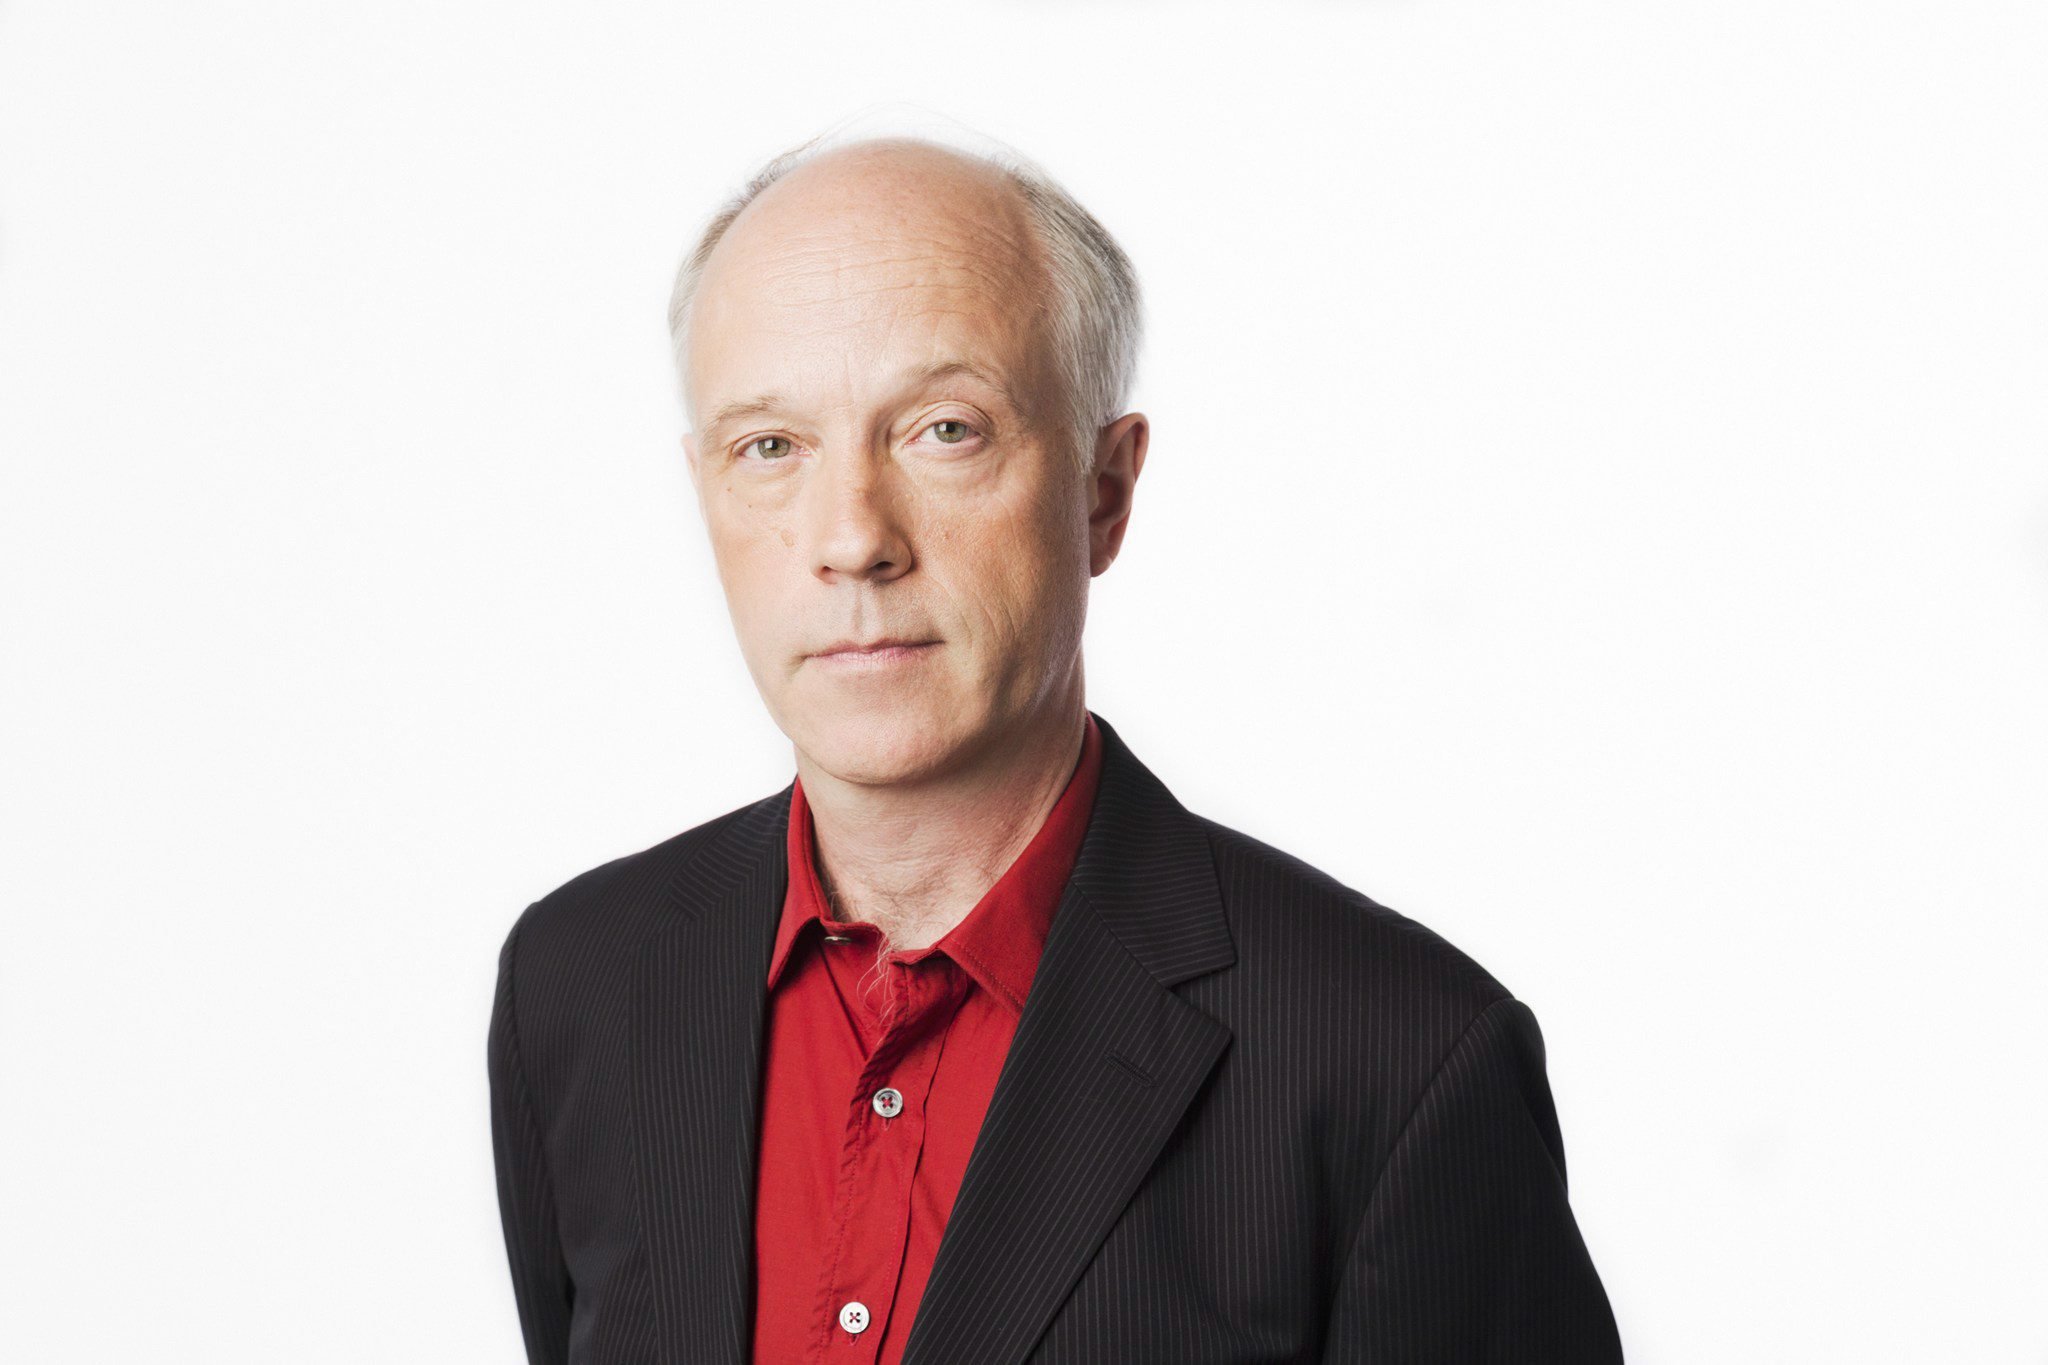 Swedish journalist Nils Horner. (Mattias Ahlm—Sveriges Radio/EPA)